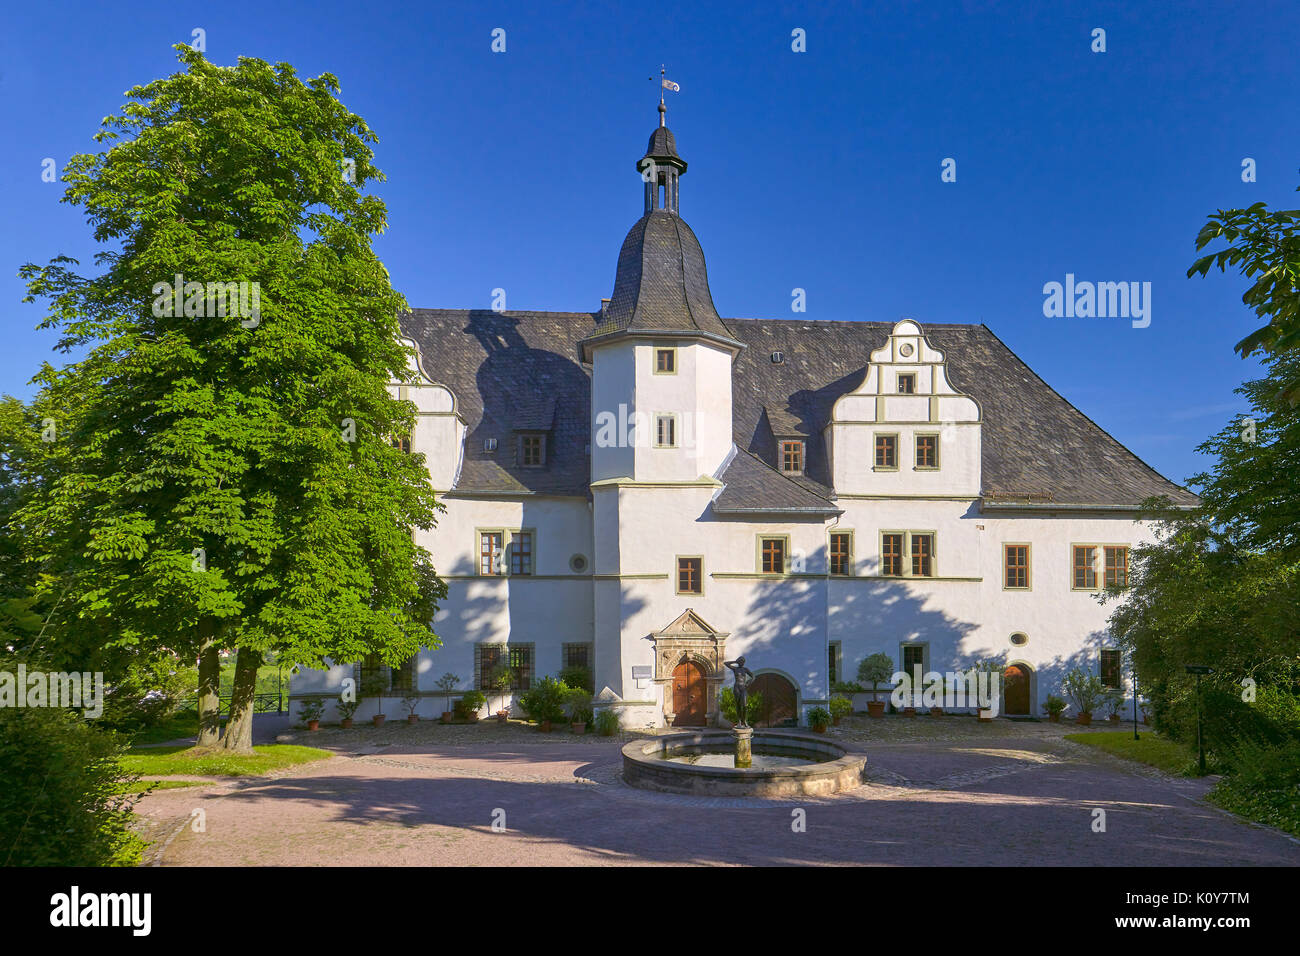 Renaissanceschloss der Dornburger Schlösser, Dornburg, Thüringen, Deutschland Stockfoto